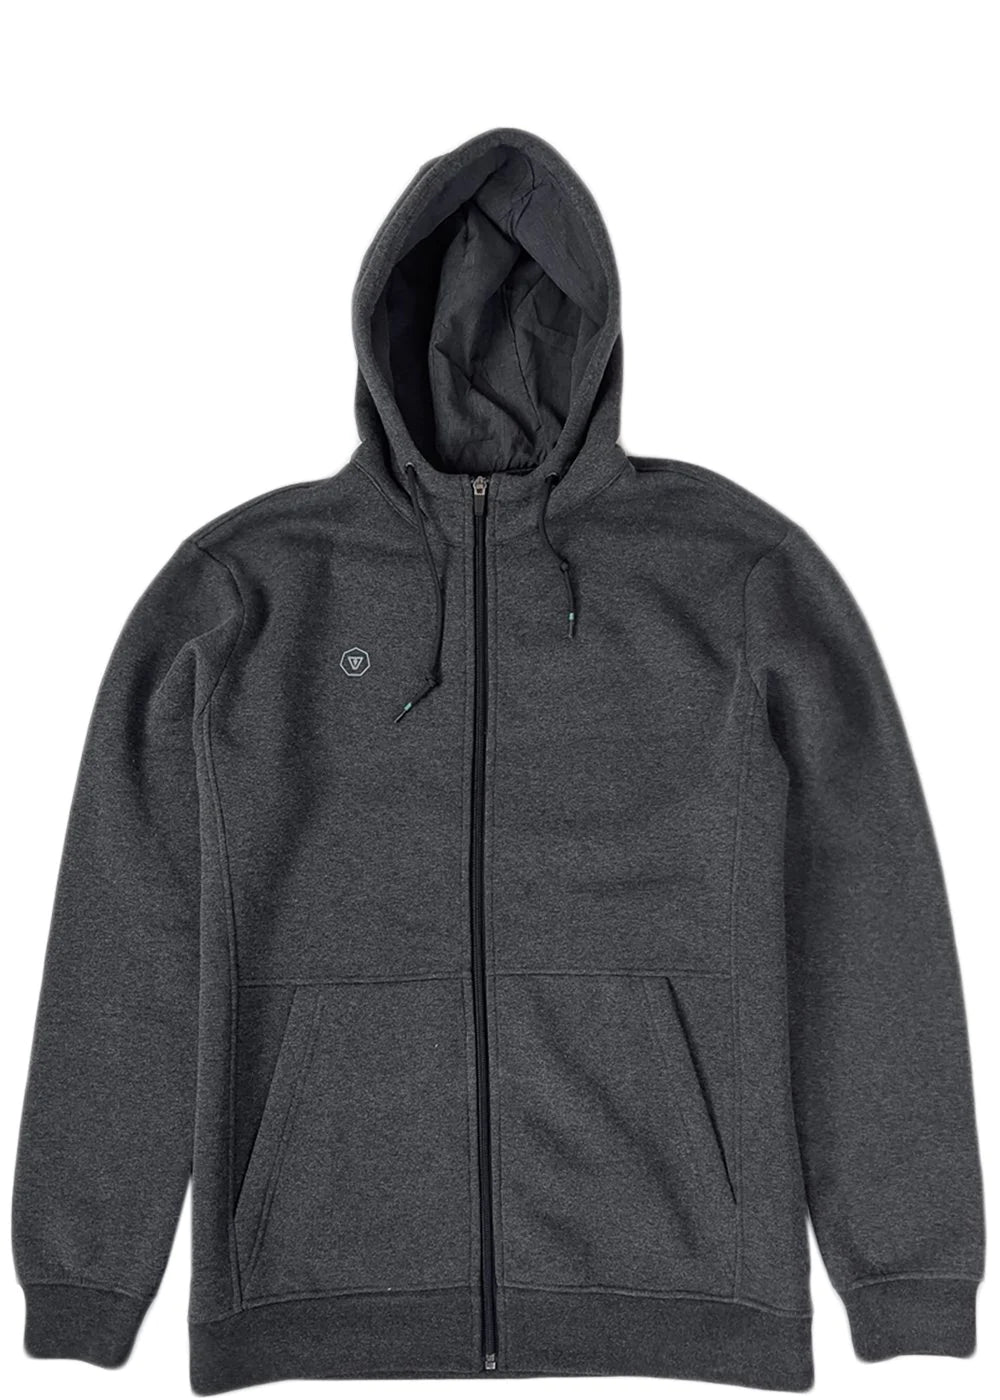 Onshore eco zip hoodie - Black Heather